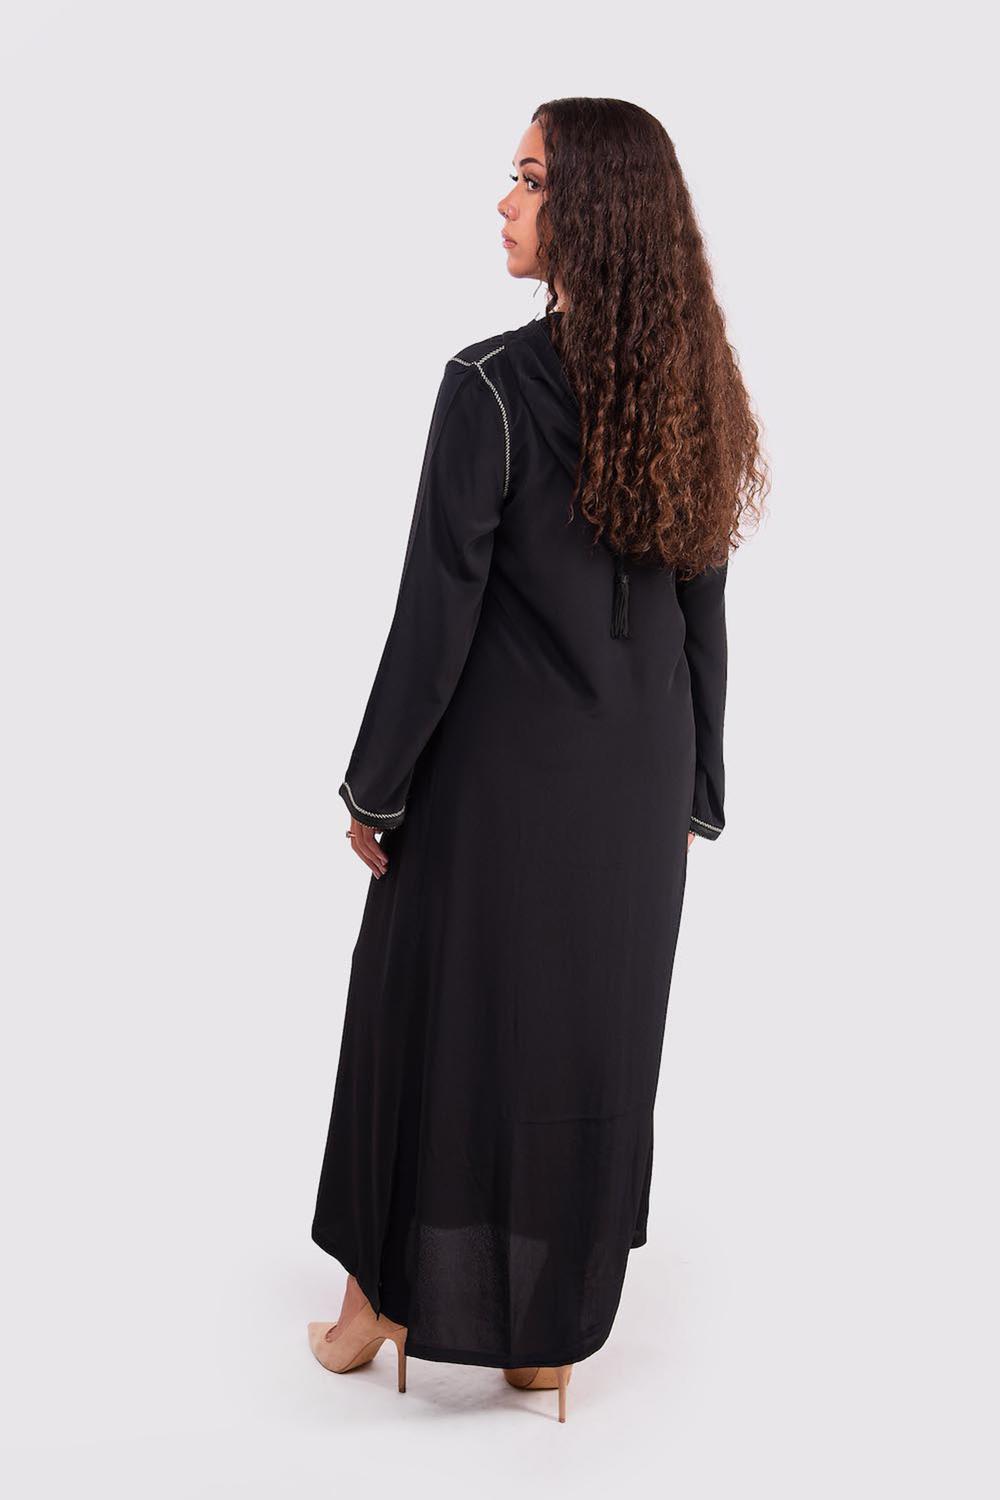 Djellaba Ouarda Hooded Embroidered Maxi Dress Kaftan in Black